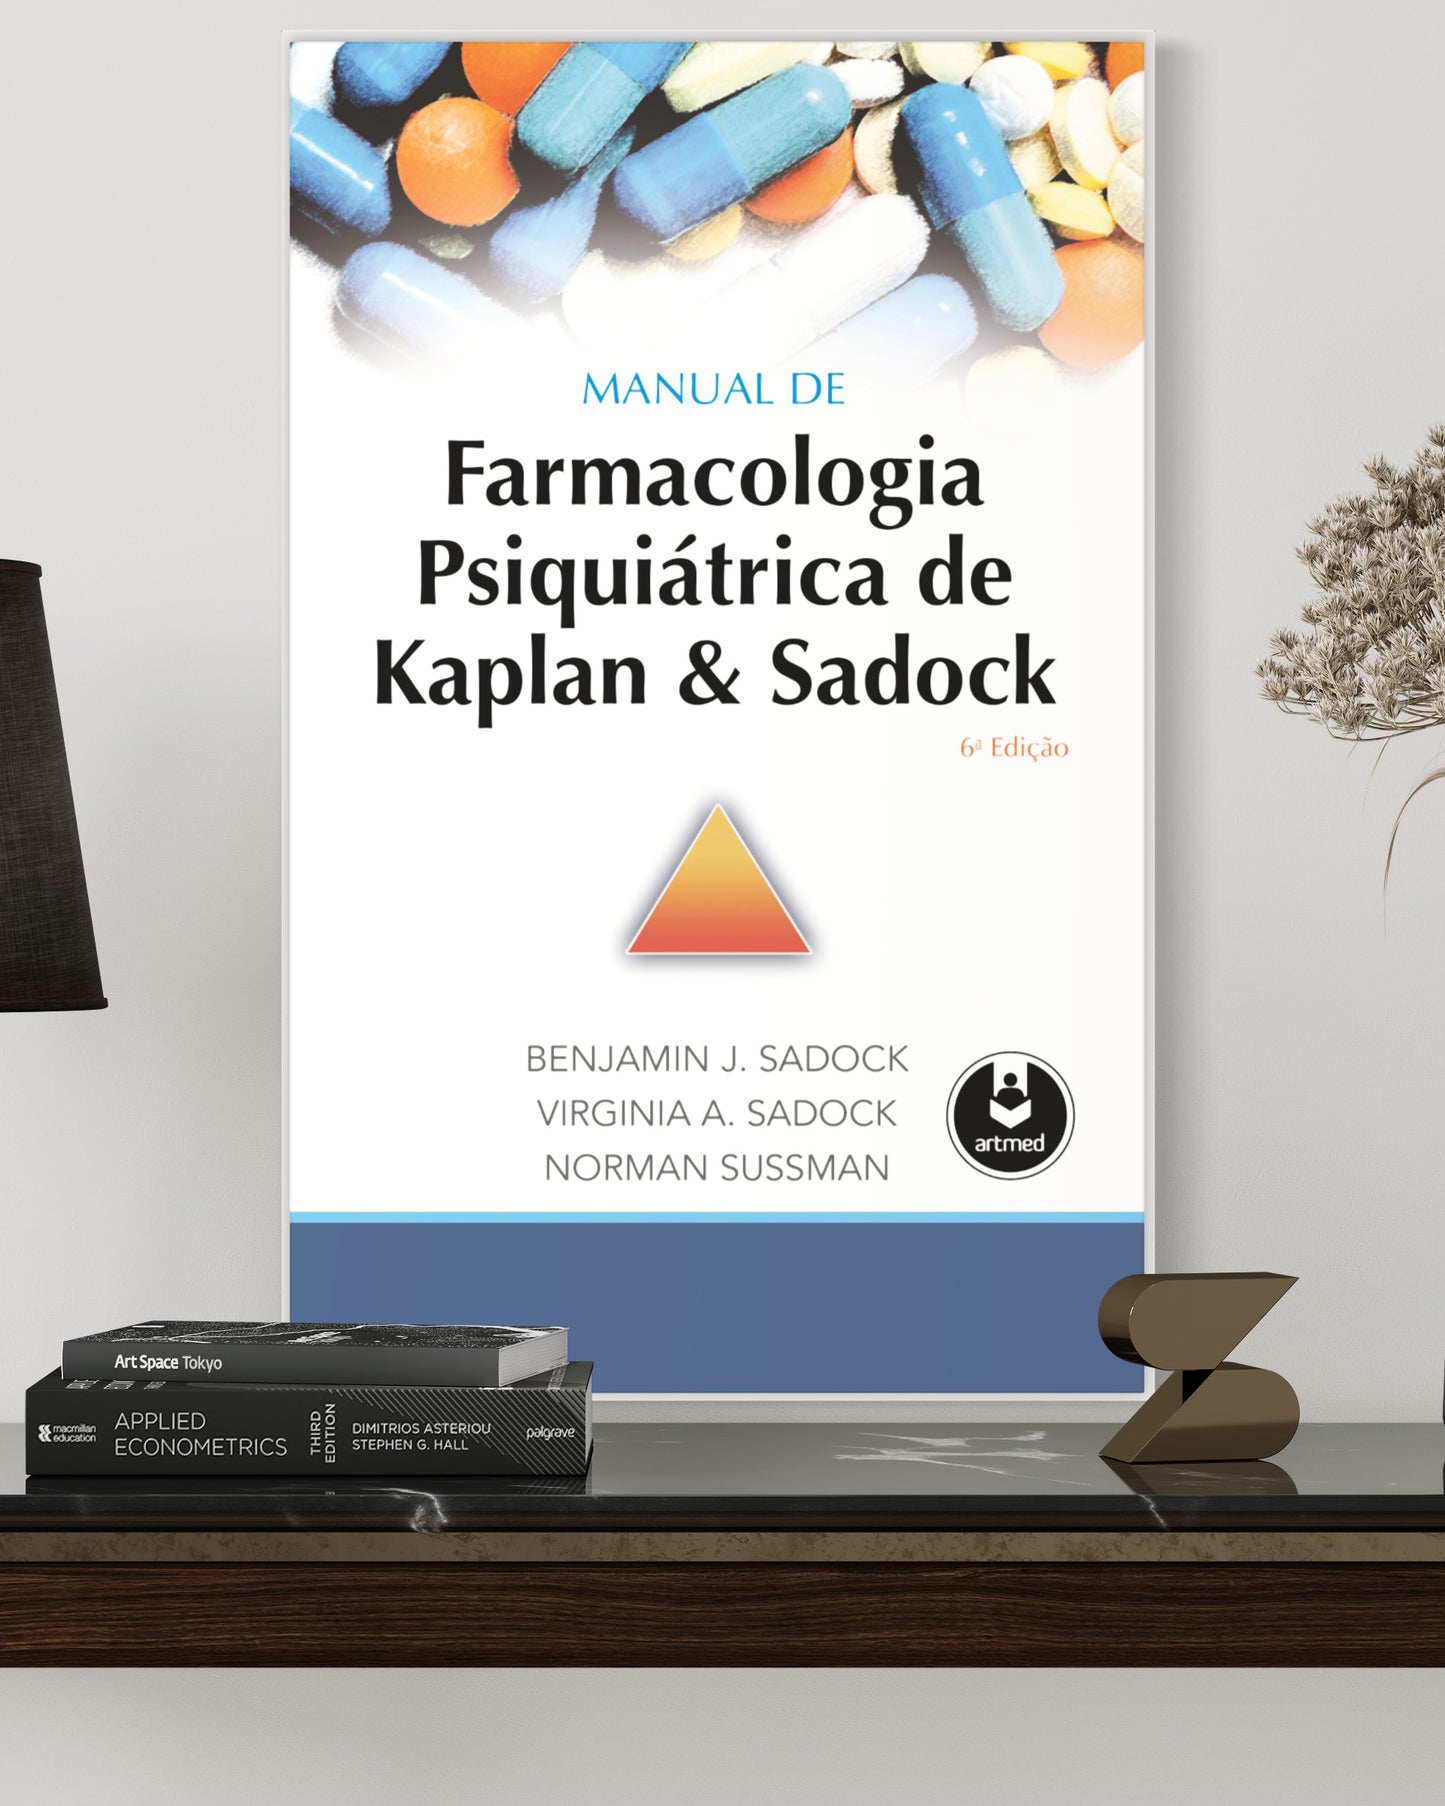 Manual de Farmacologia Psiquiátrica de Kaplan & Sadock - 6ª Edição - Estante Digital